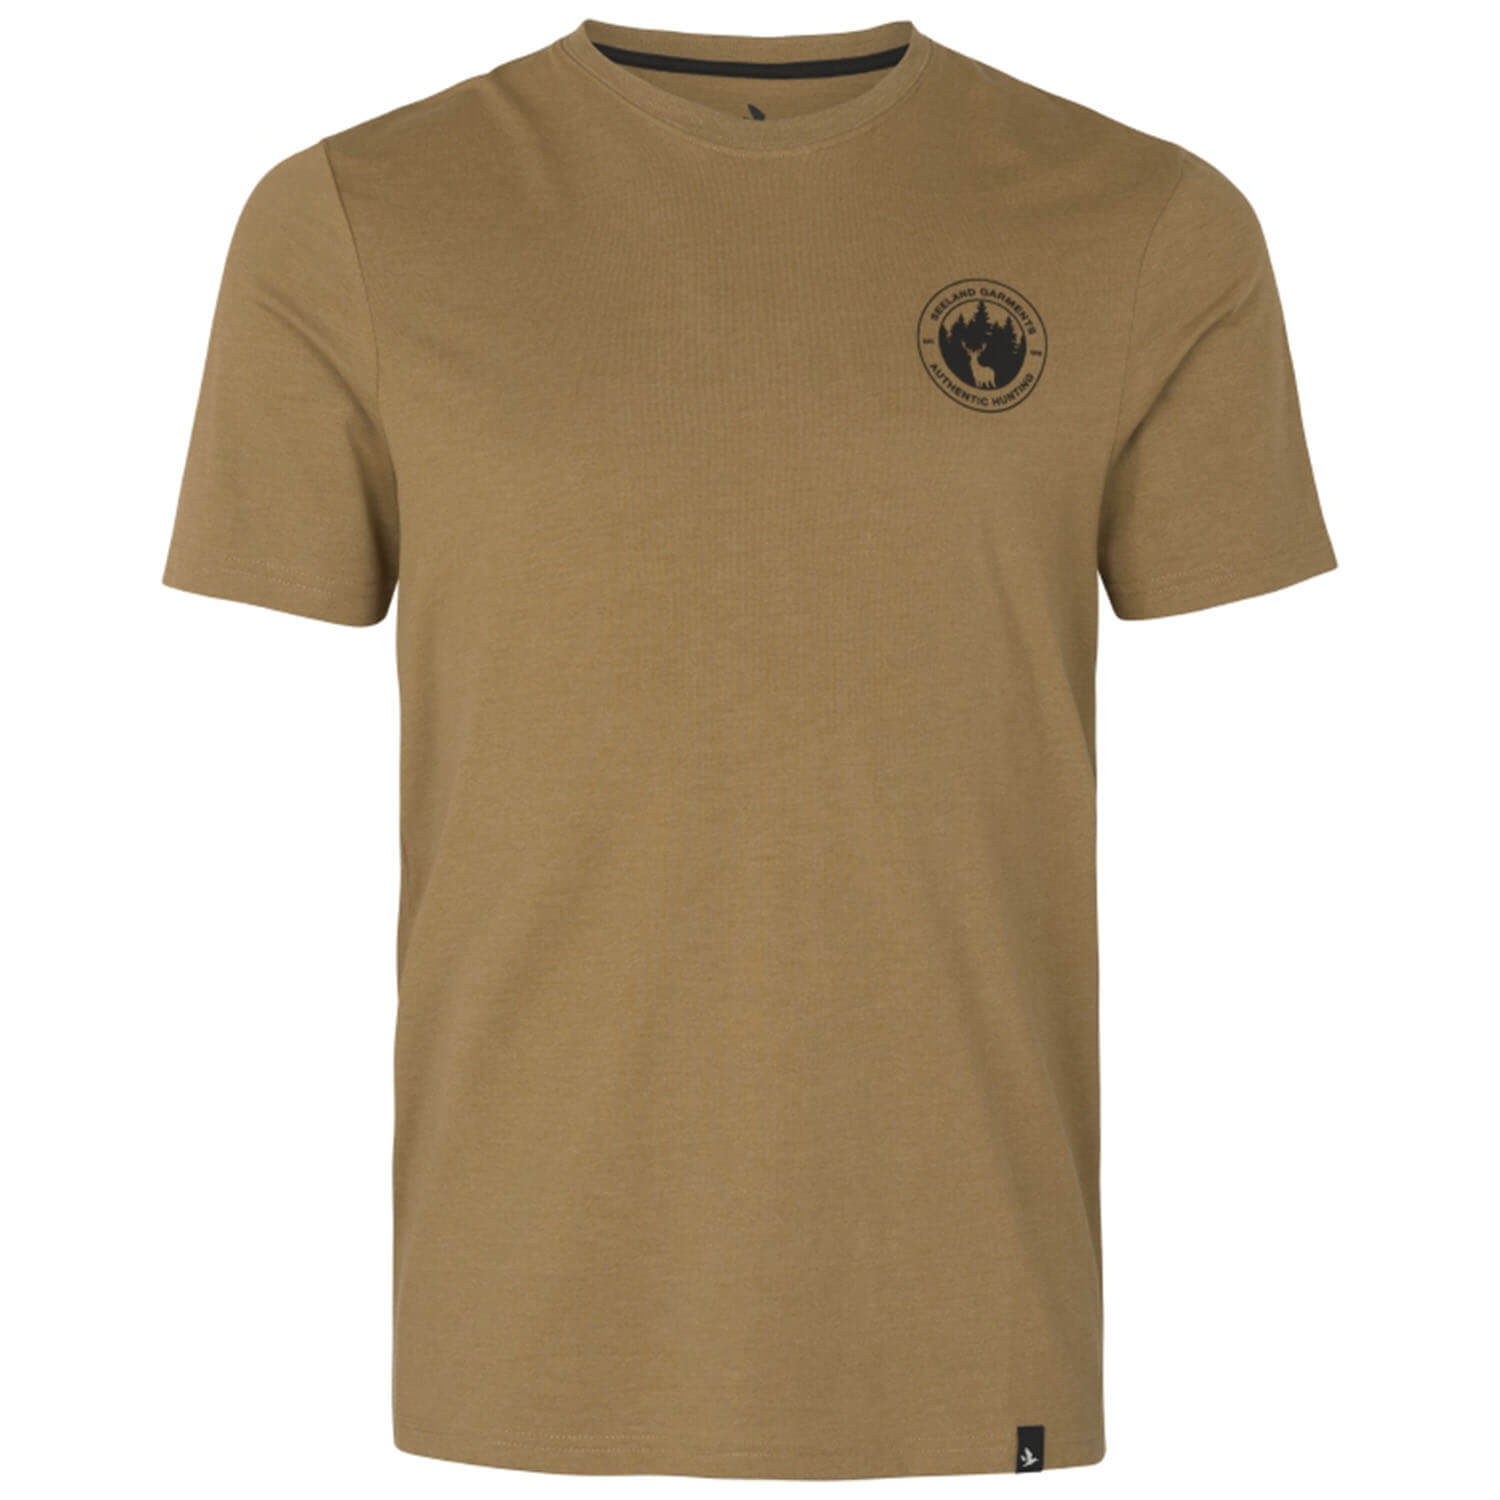 Seeland T-Shirt Saker (Antique Bronze Melange) - Shirts